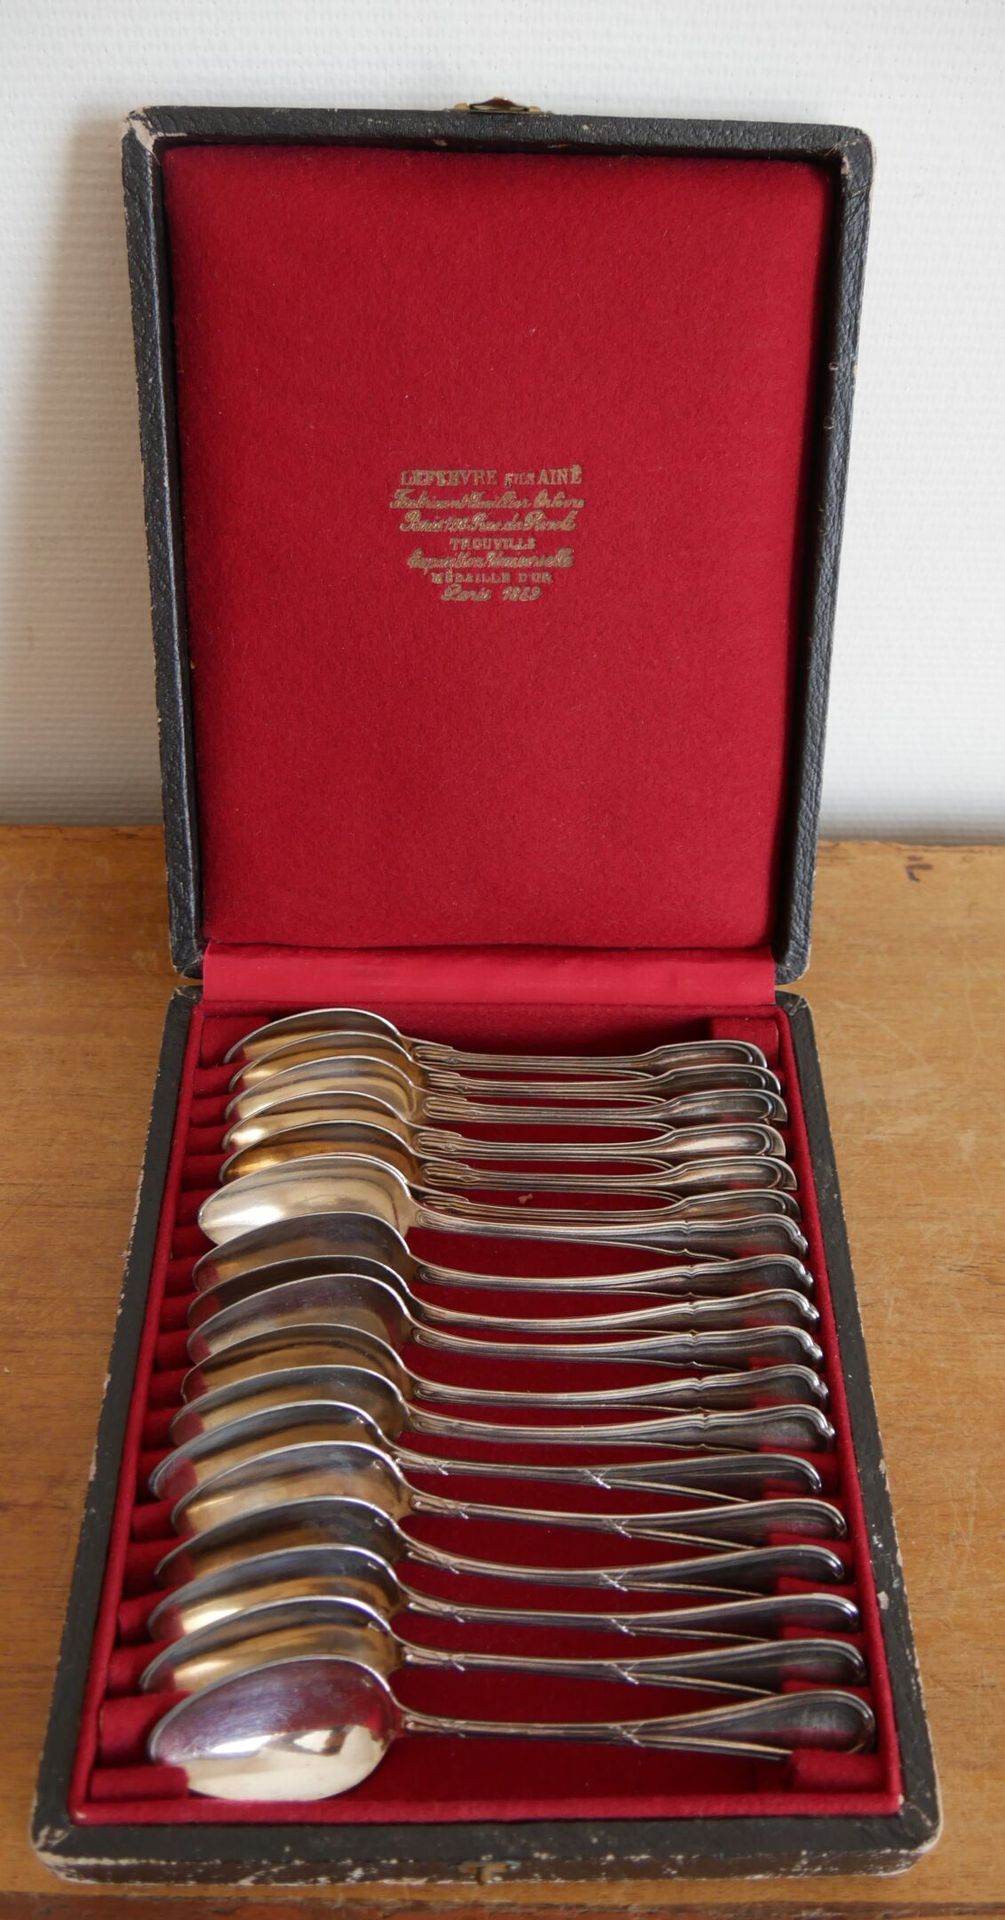 Null 12 cucharas pequeñas en plata de 925 milésimas, modelo " red ".

Peso bruto&hellip;